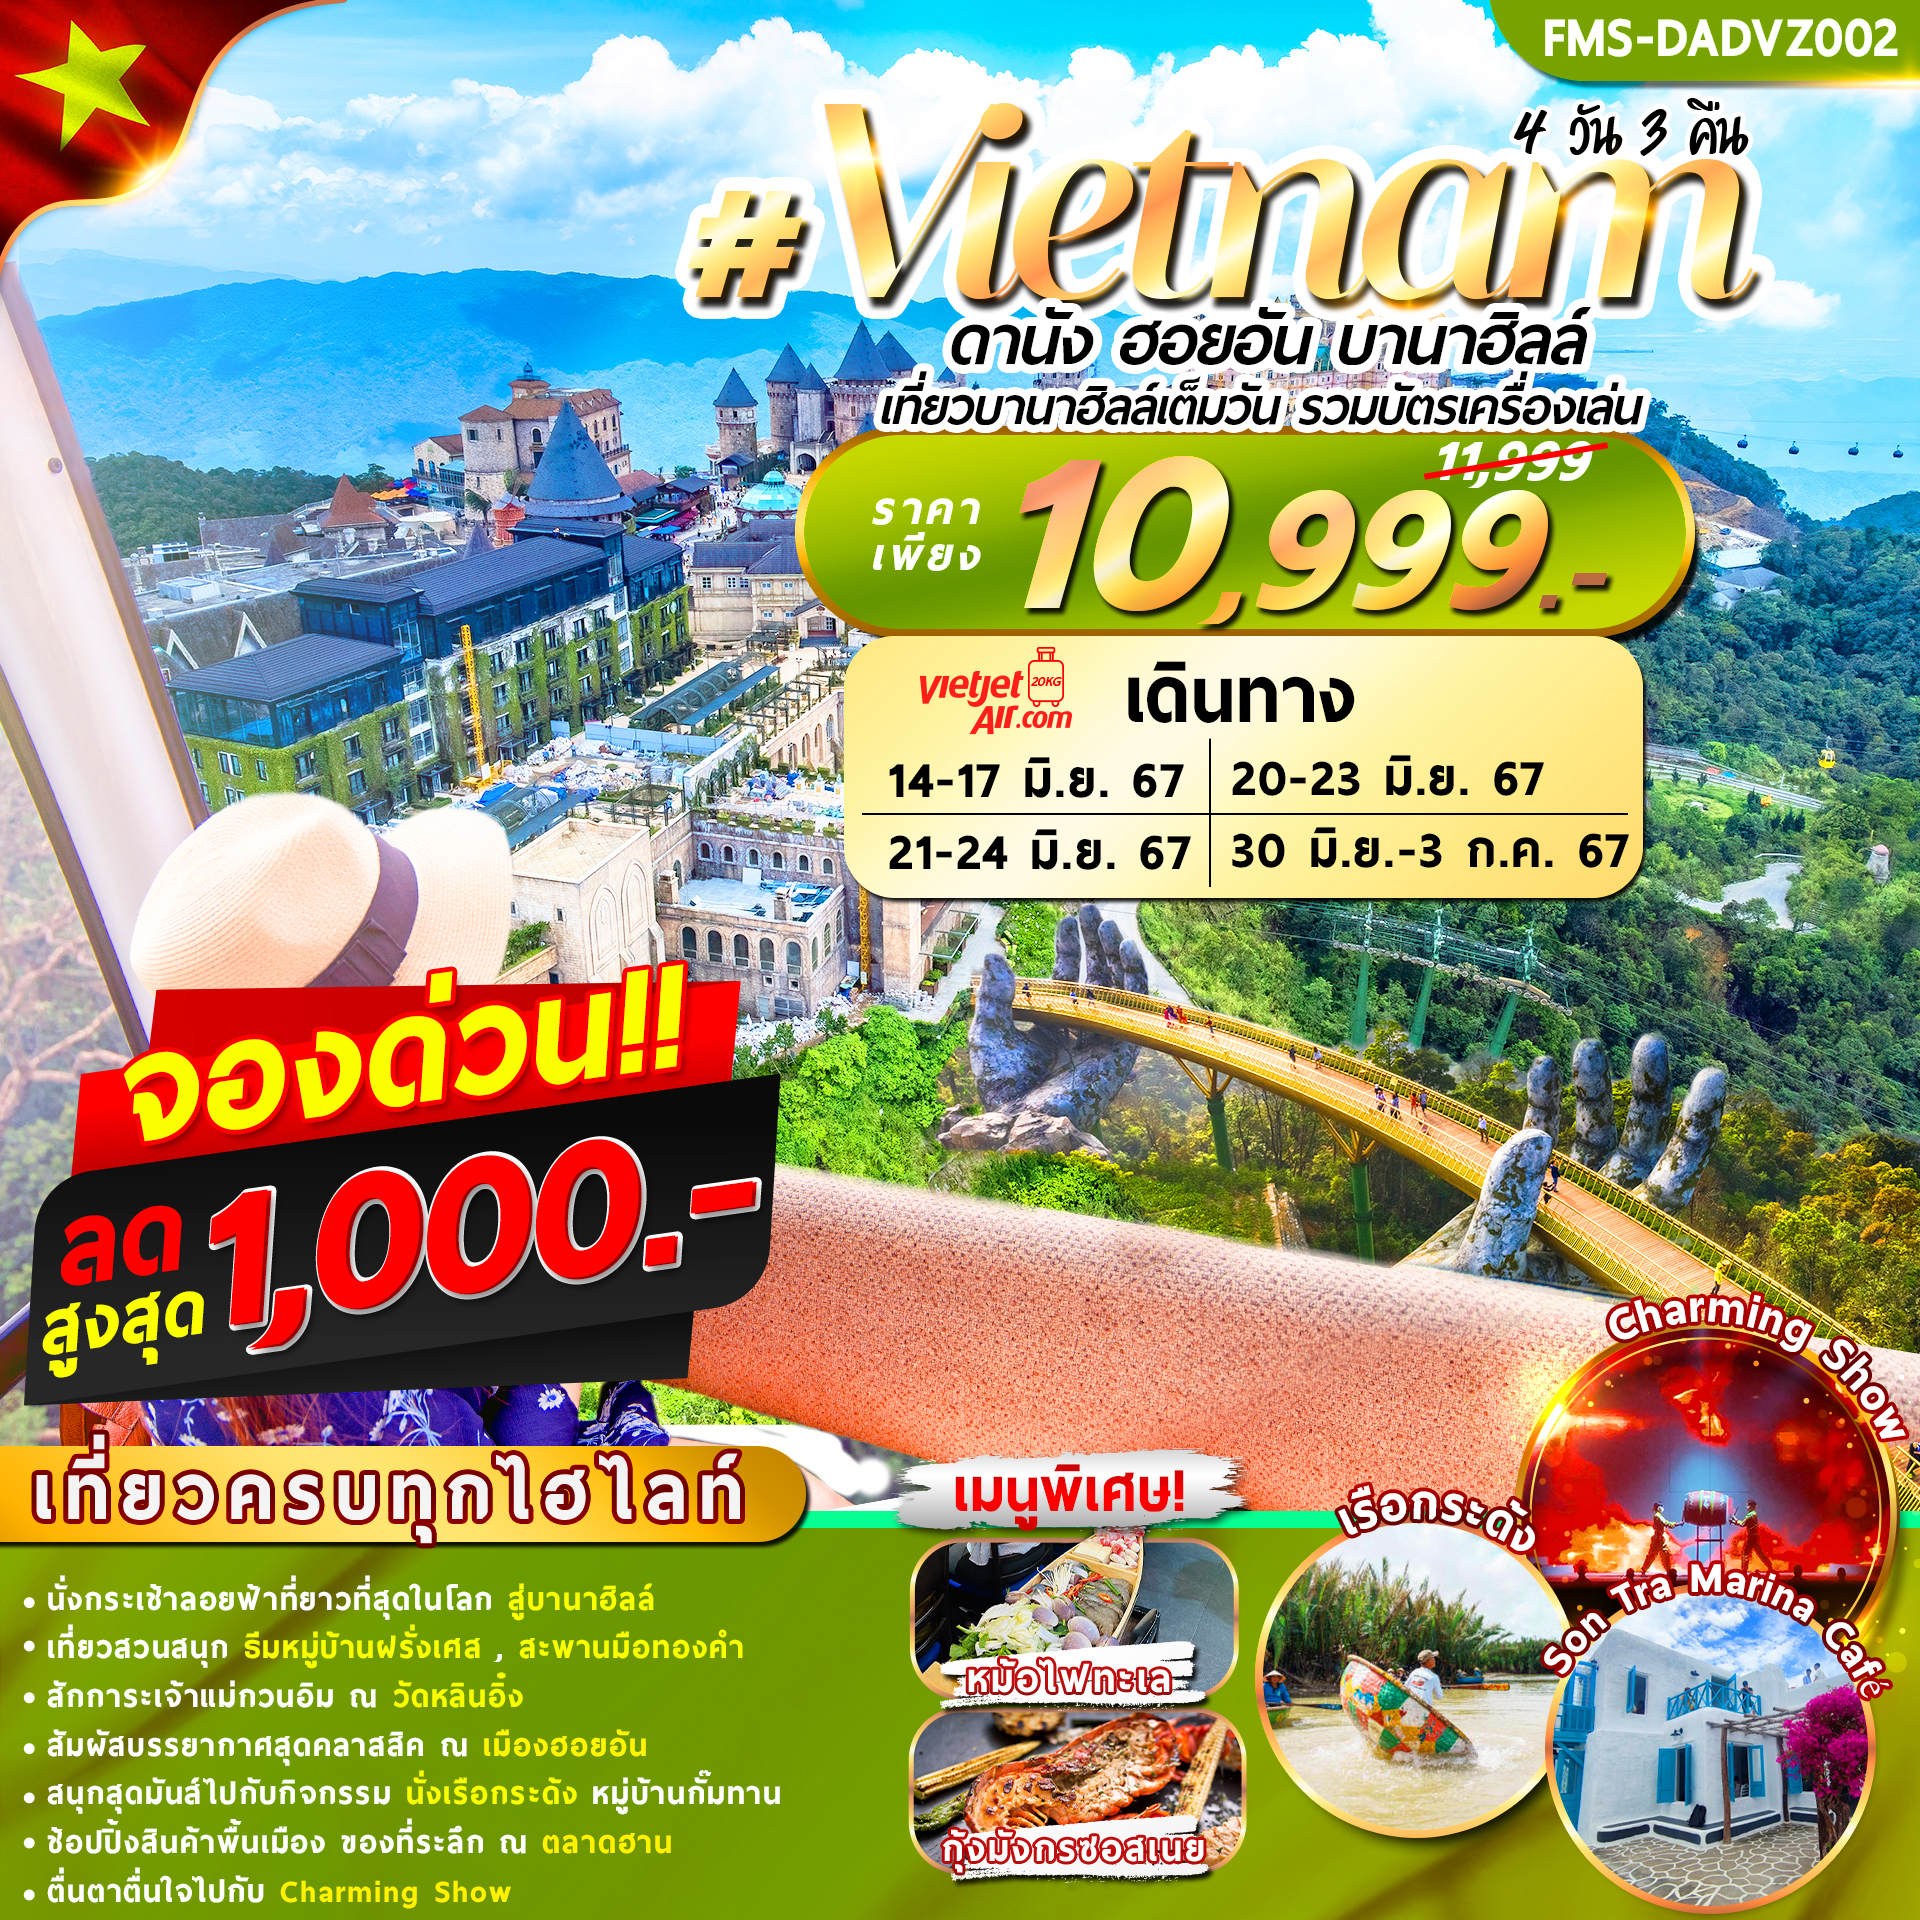 FMS-DADVZ002 เวียดนาม : ดานัง ฮอยอัน บานาฮิลล์ 4D3N By VZ